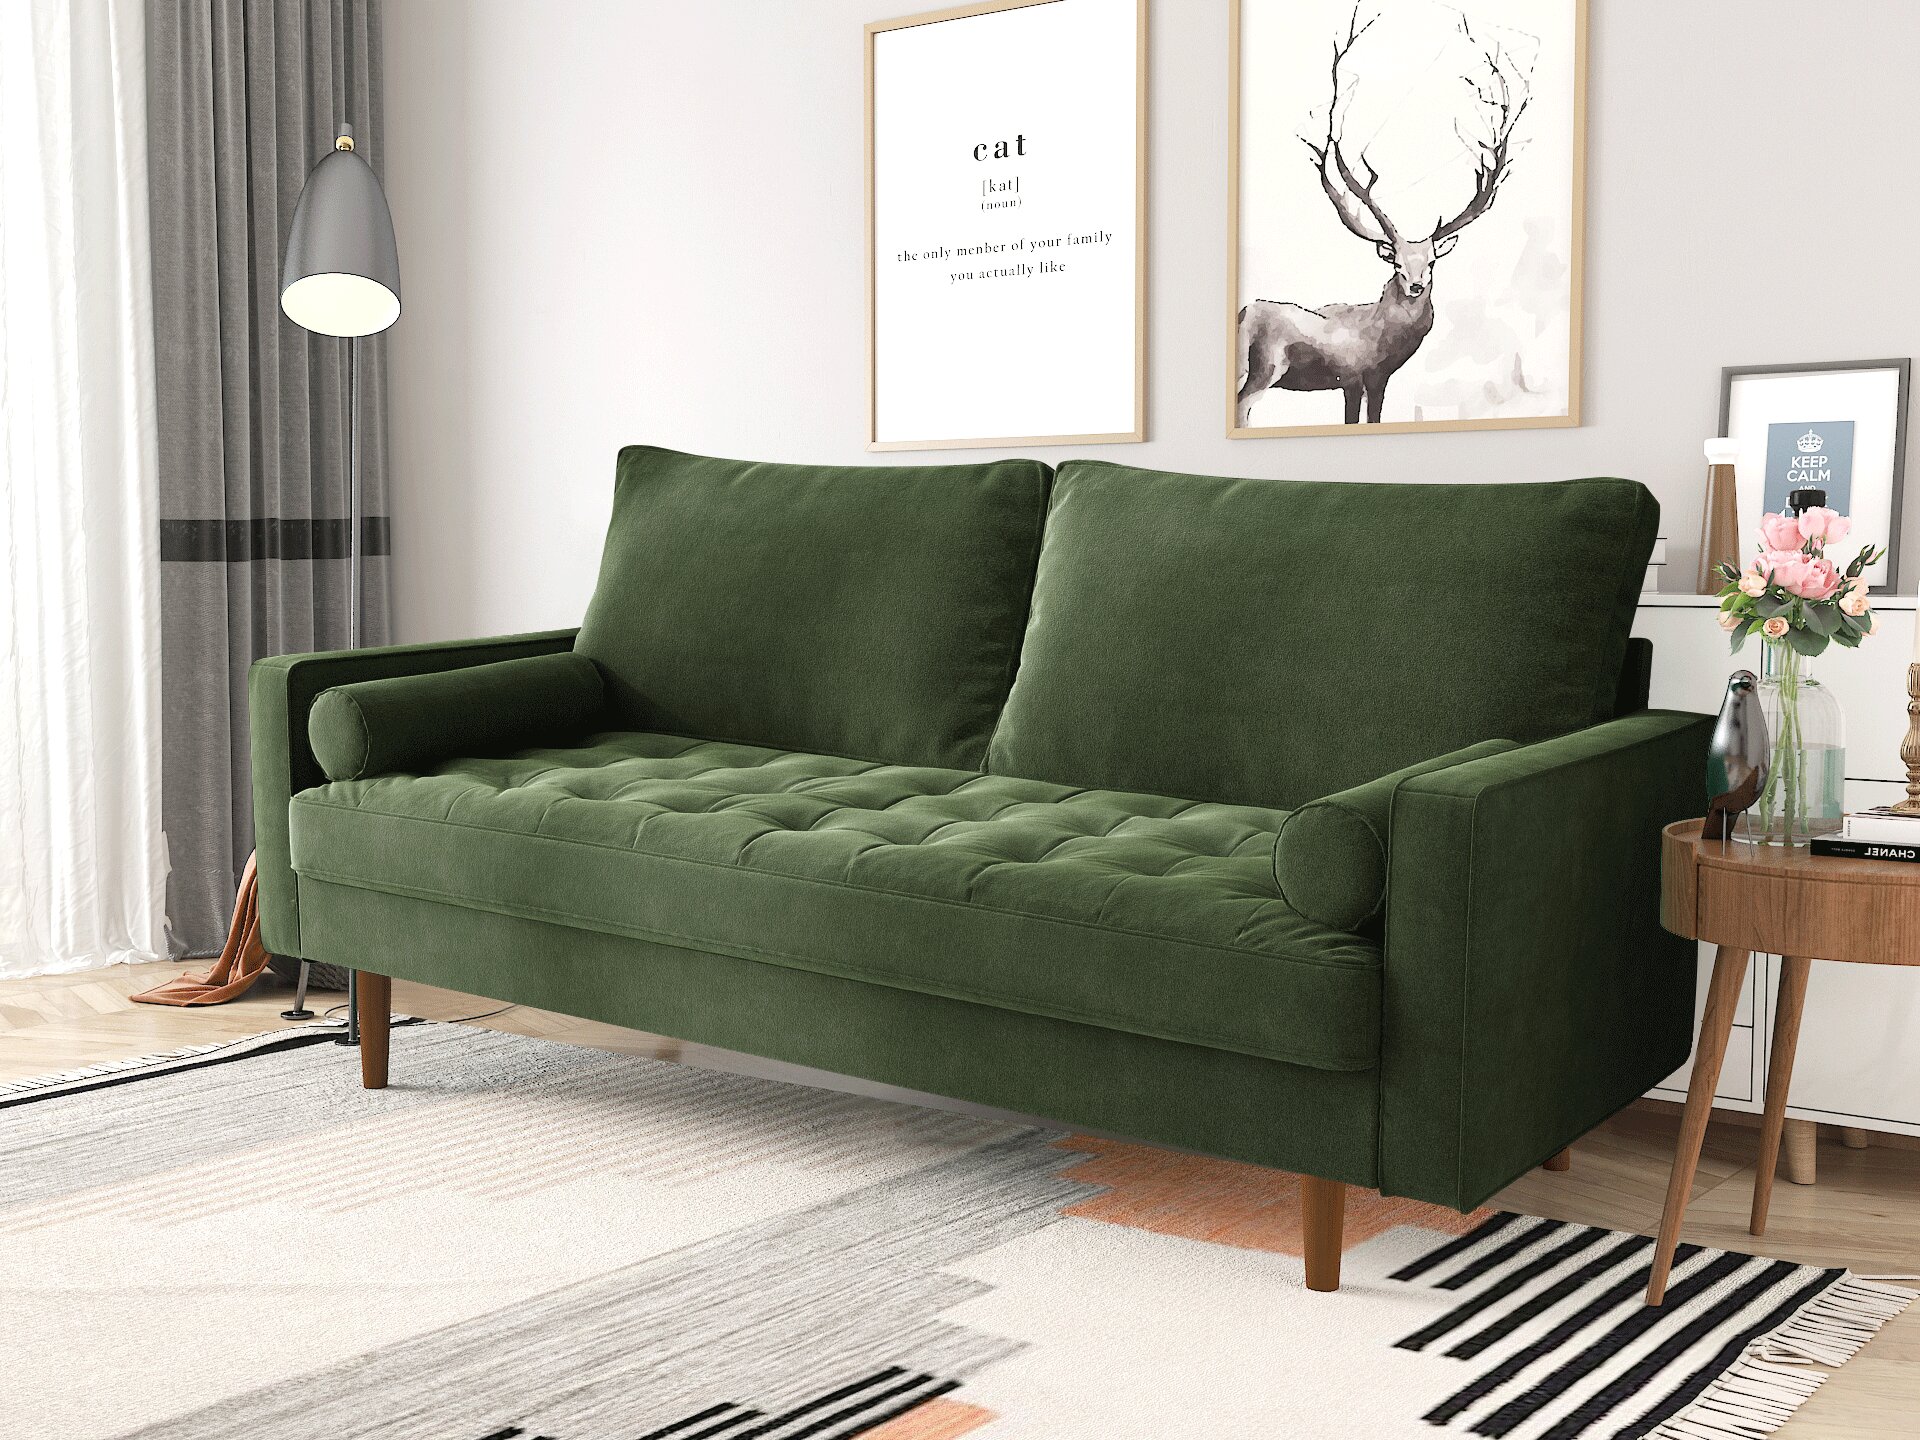 Studio® Mauck 70" Square Arm Sofa with Round Pillow Reviews | Wayfair